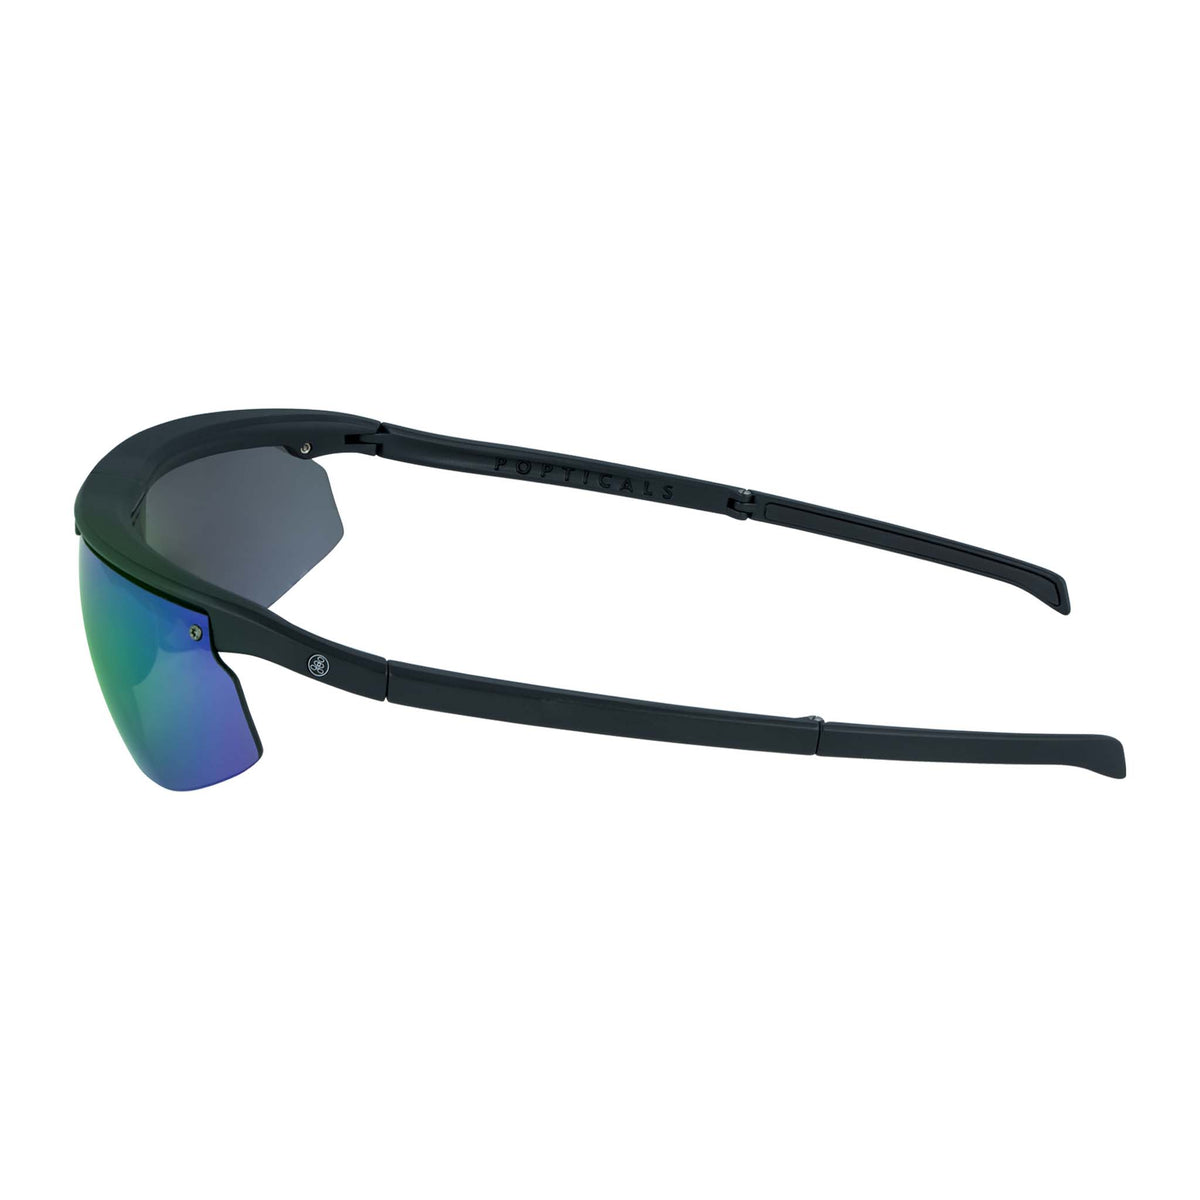 Popticals, Premium Compact Sunglasses, PopStar, 010040-BMEN, Polarized Sunglasses, Matte Black Frame, Gray Lenses w/Green Mirror Finish, Side View